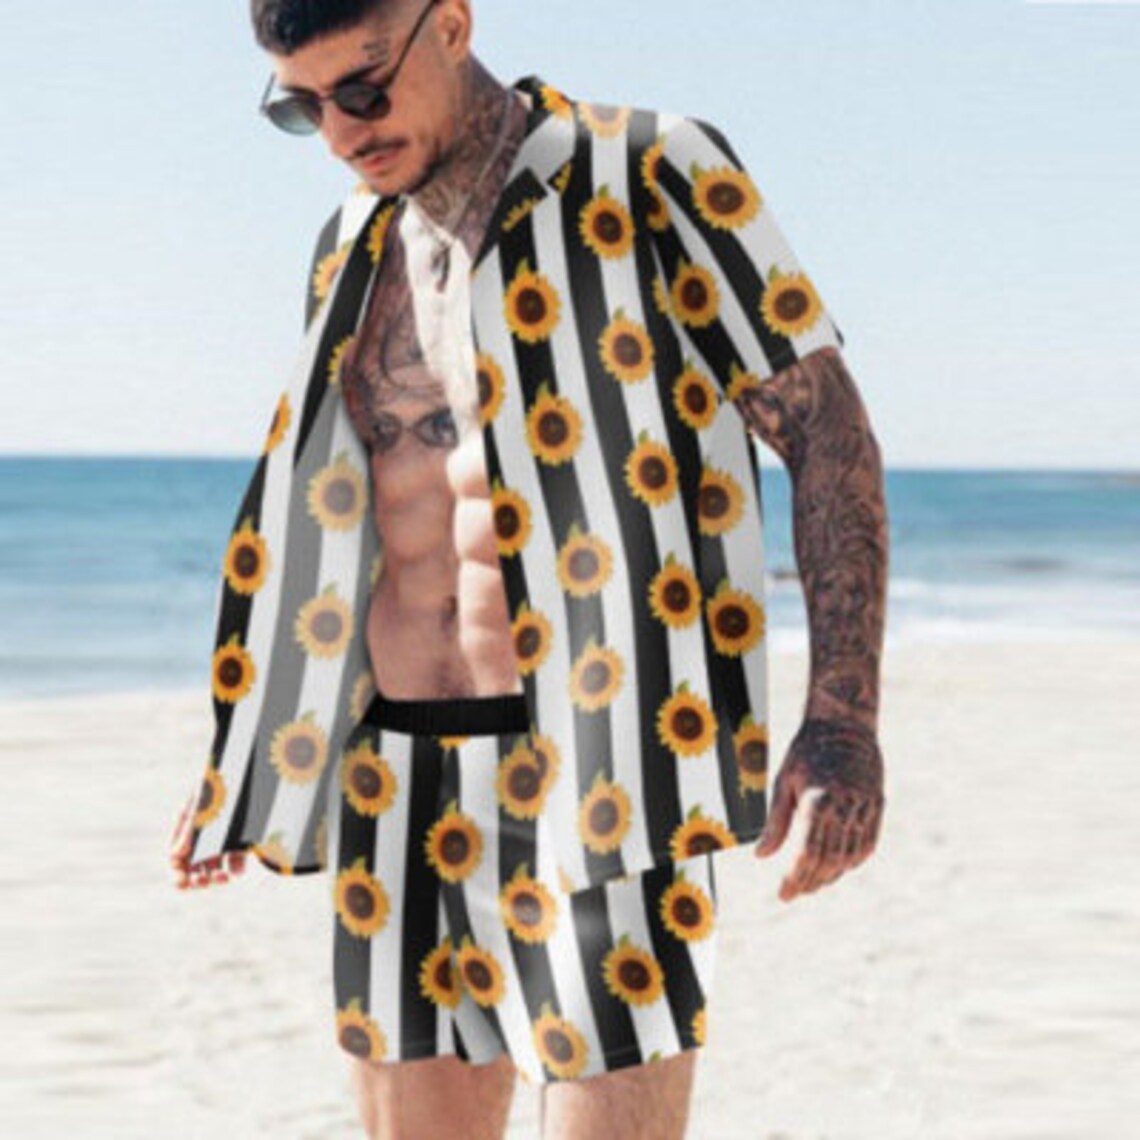 Floral Shirt Beach Two Piece Suit New Fashion Men Sets - Etsy